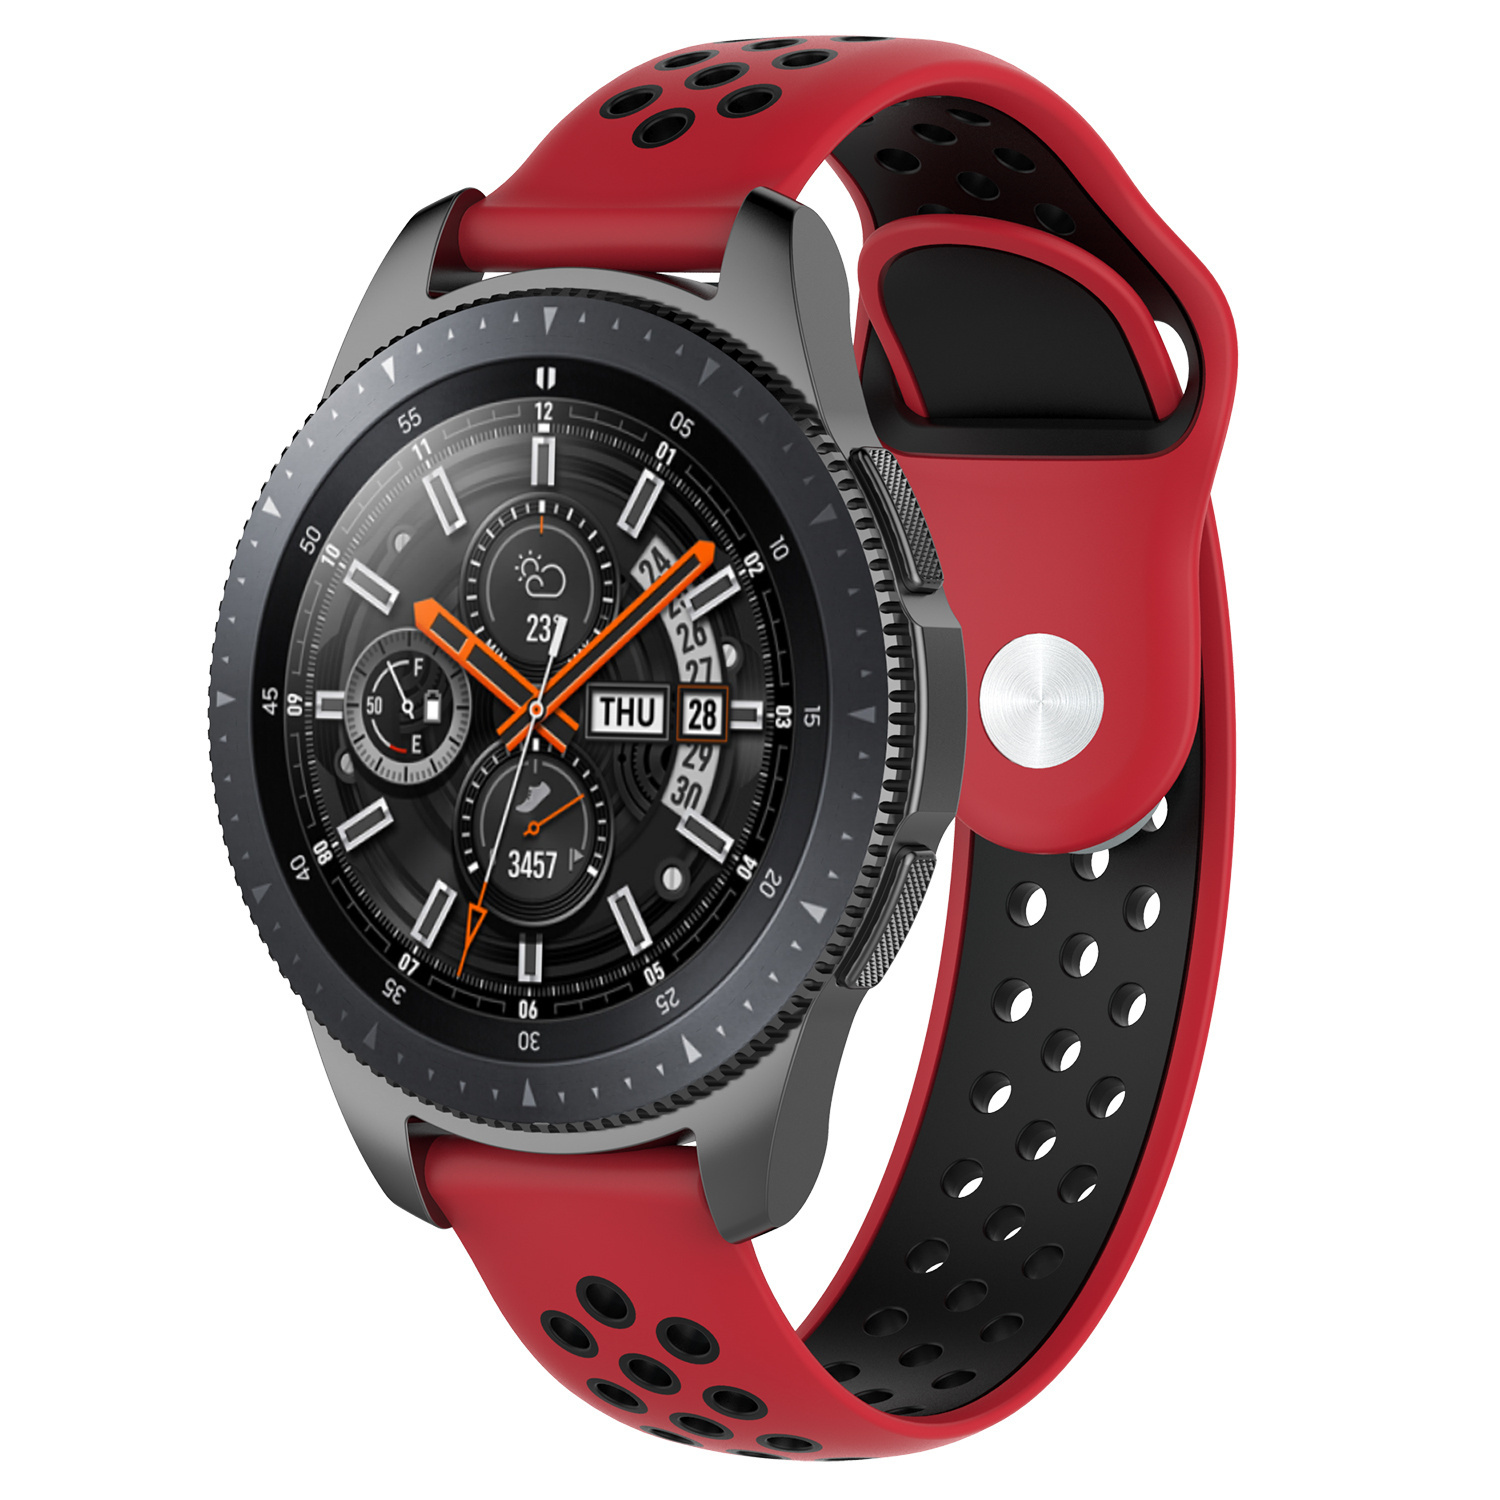 Huawei Watch GT dupla sport szalag - piros fekete